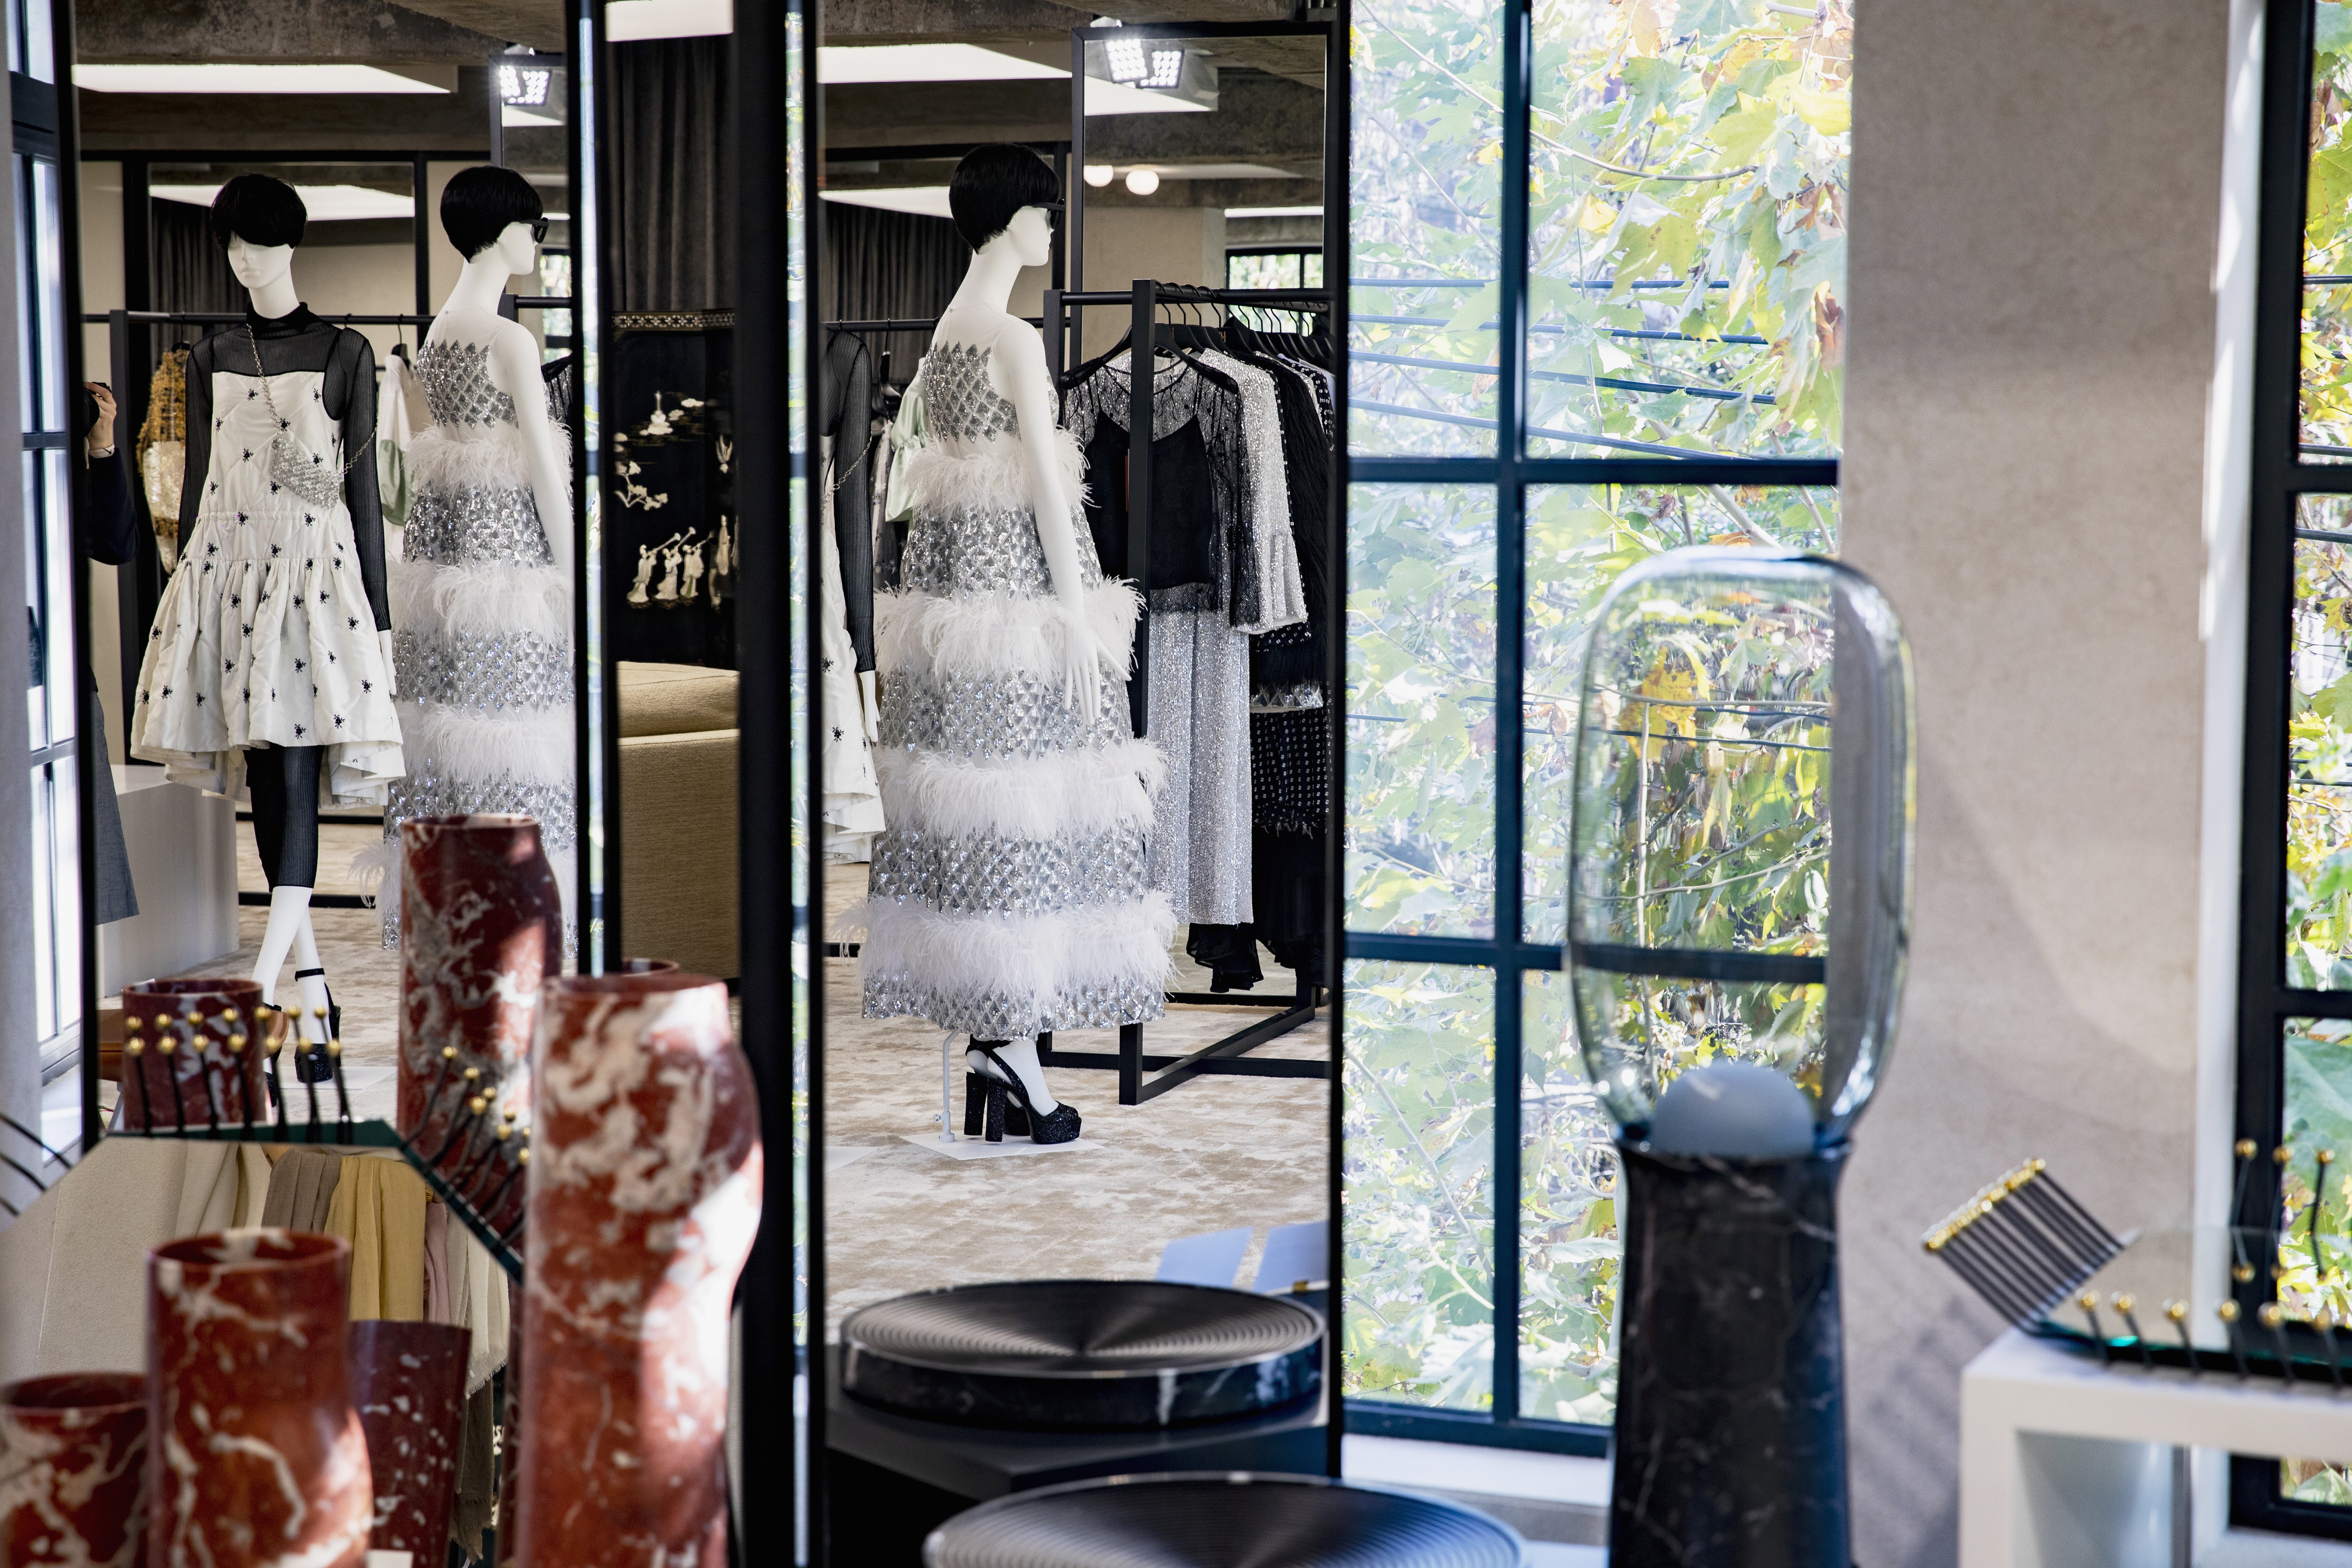 Inside fashion boutique Le Monde de SHC, located in Shanghai’s French Concession.